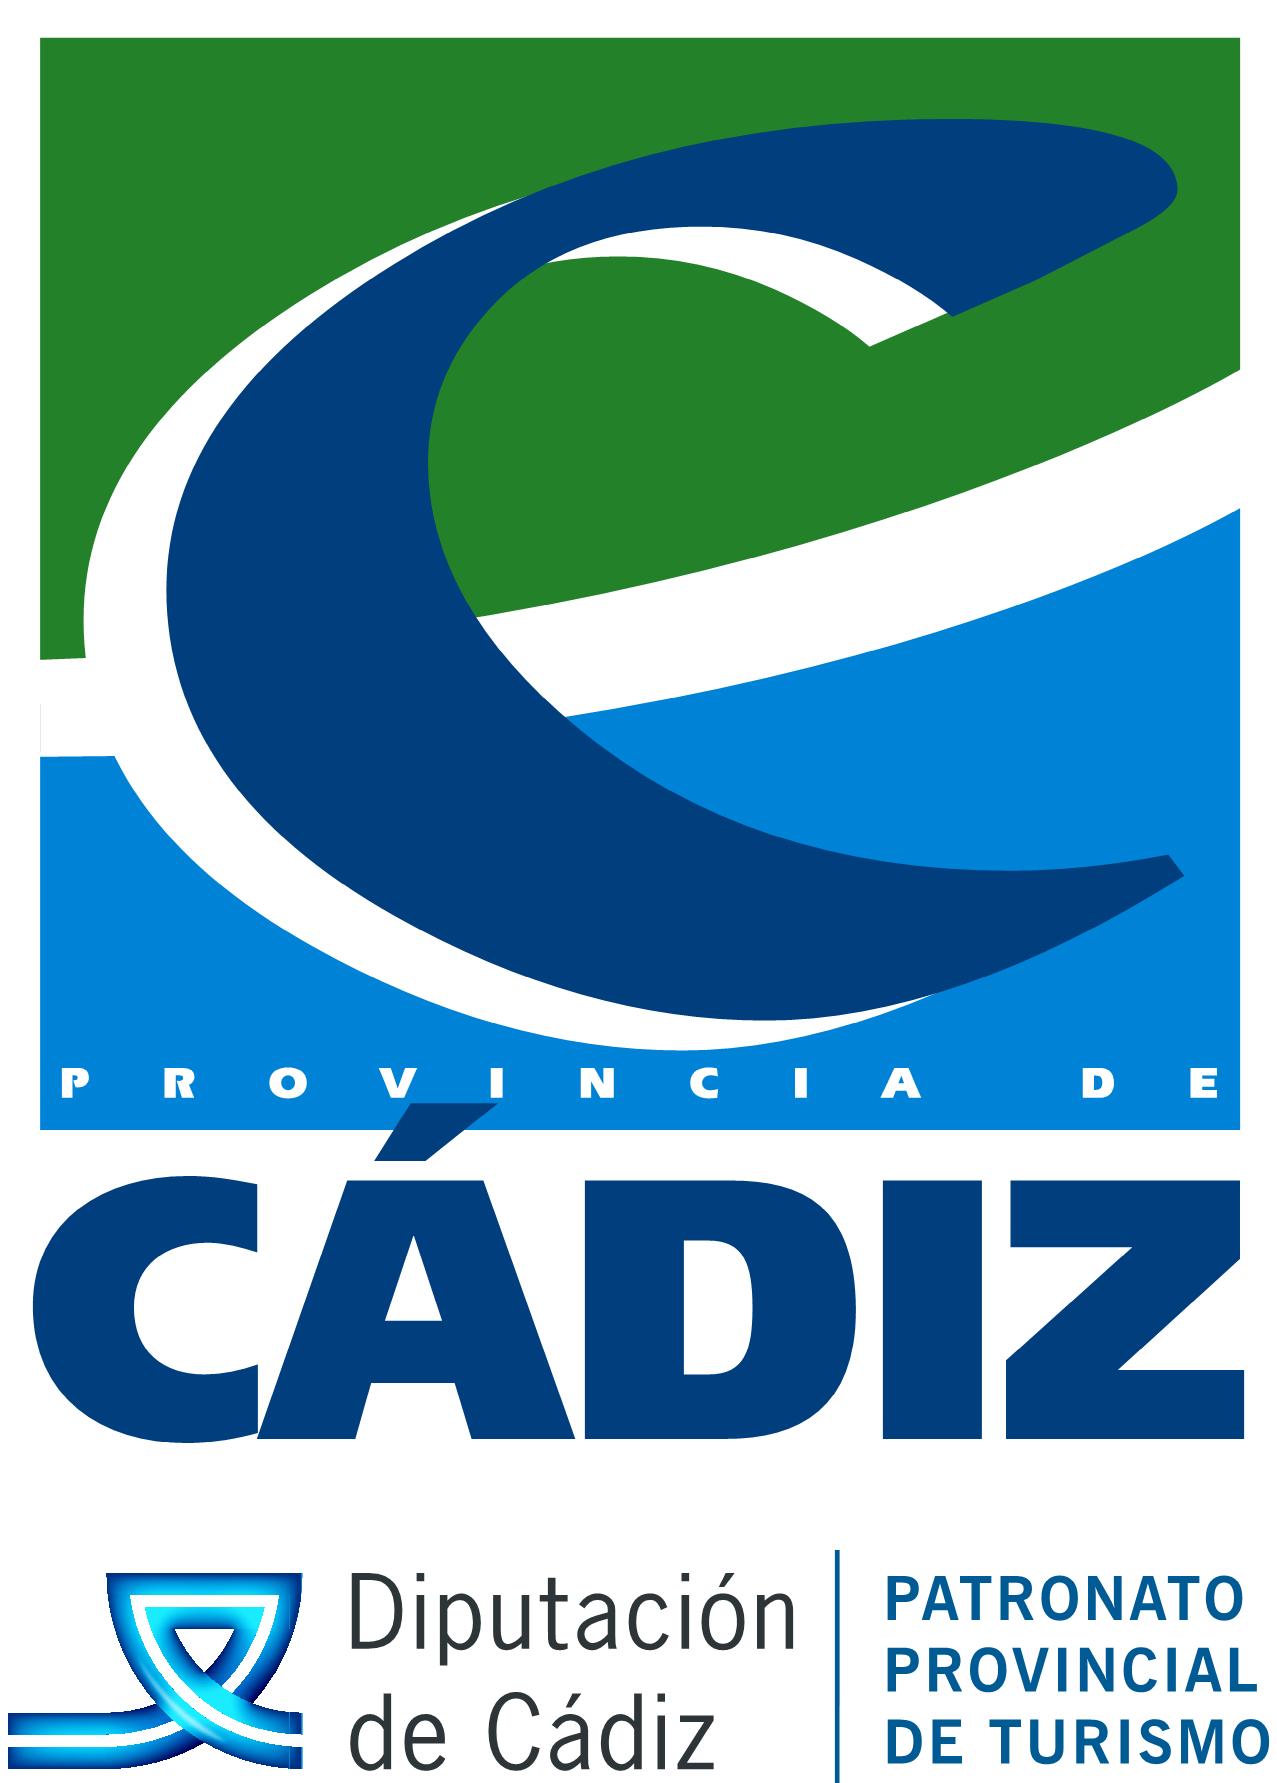 Cádiz Tourism Board